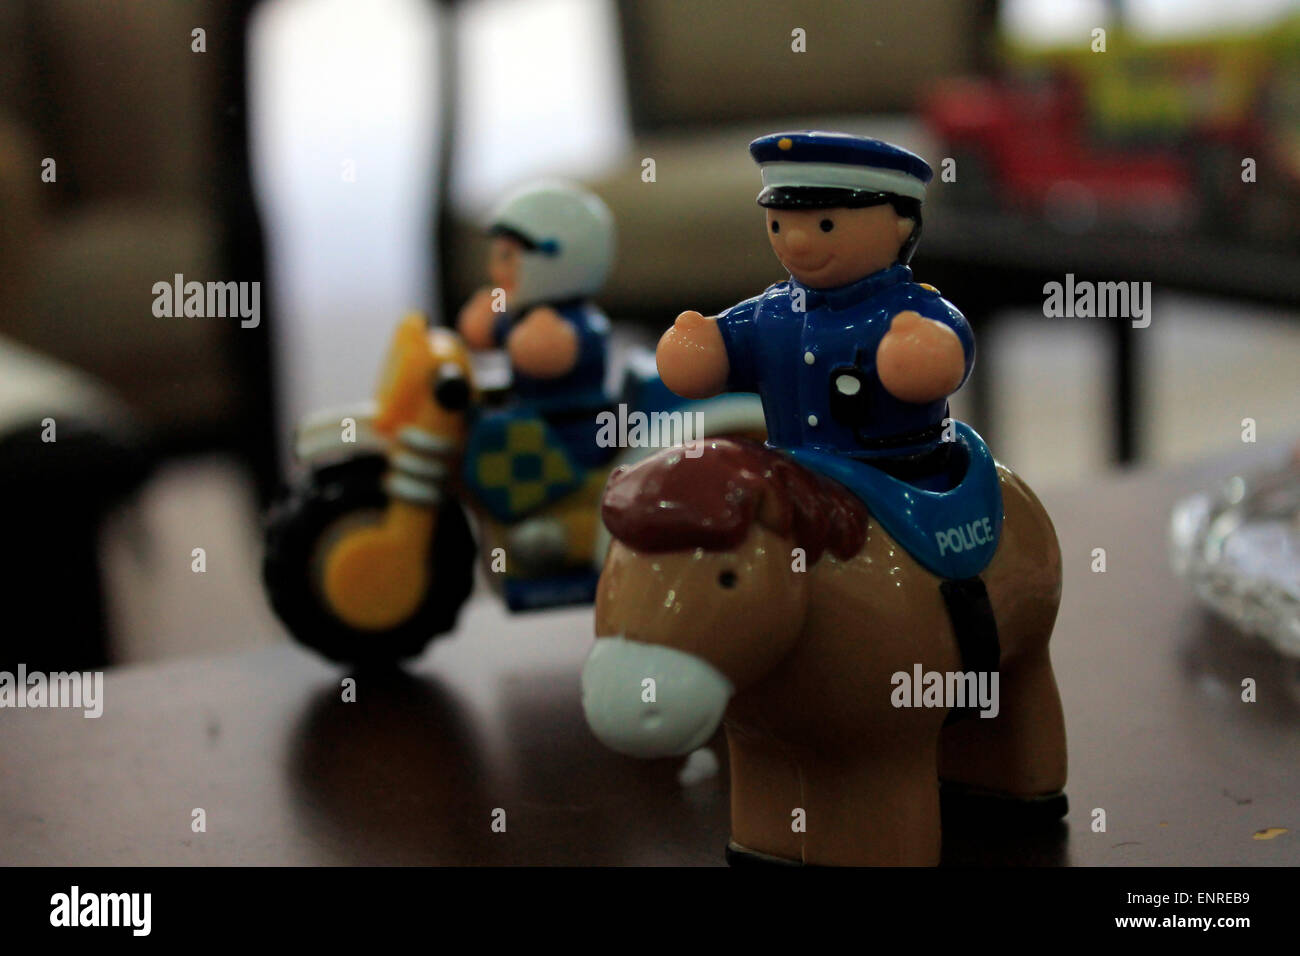 horse riding police toys Stock Photo